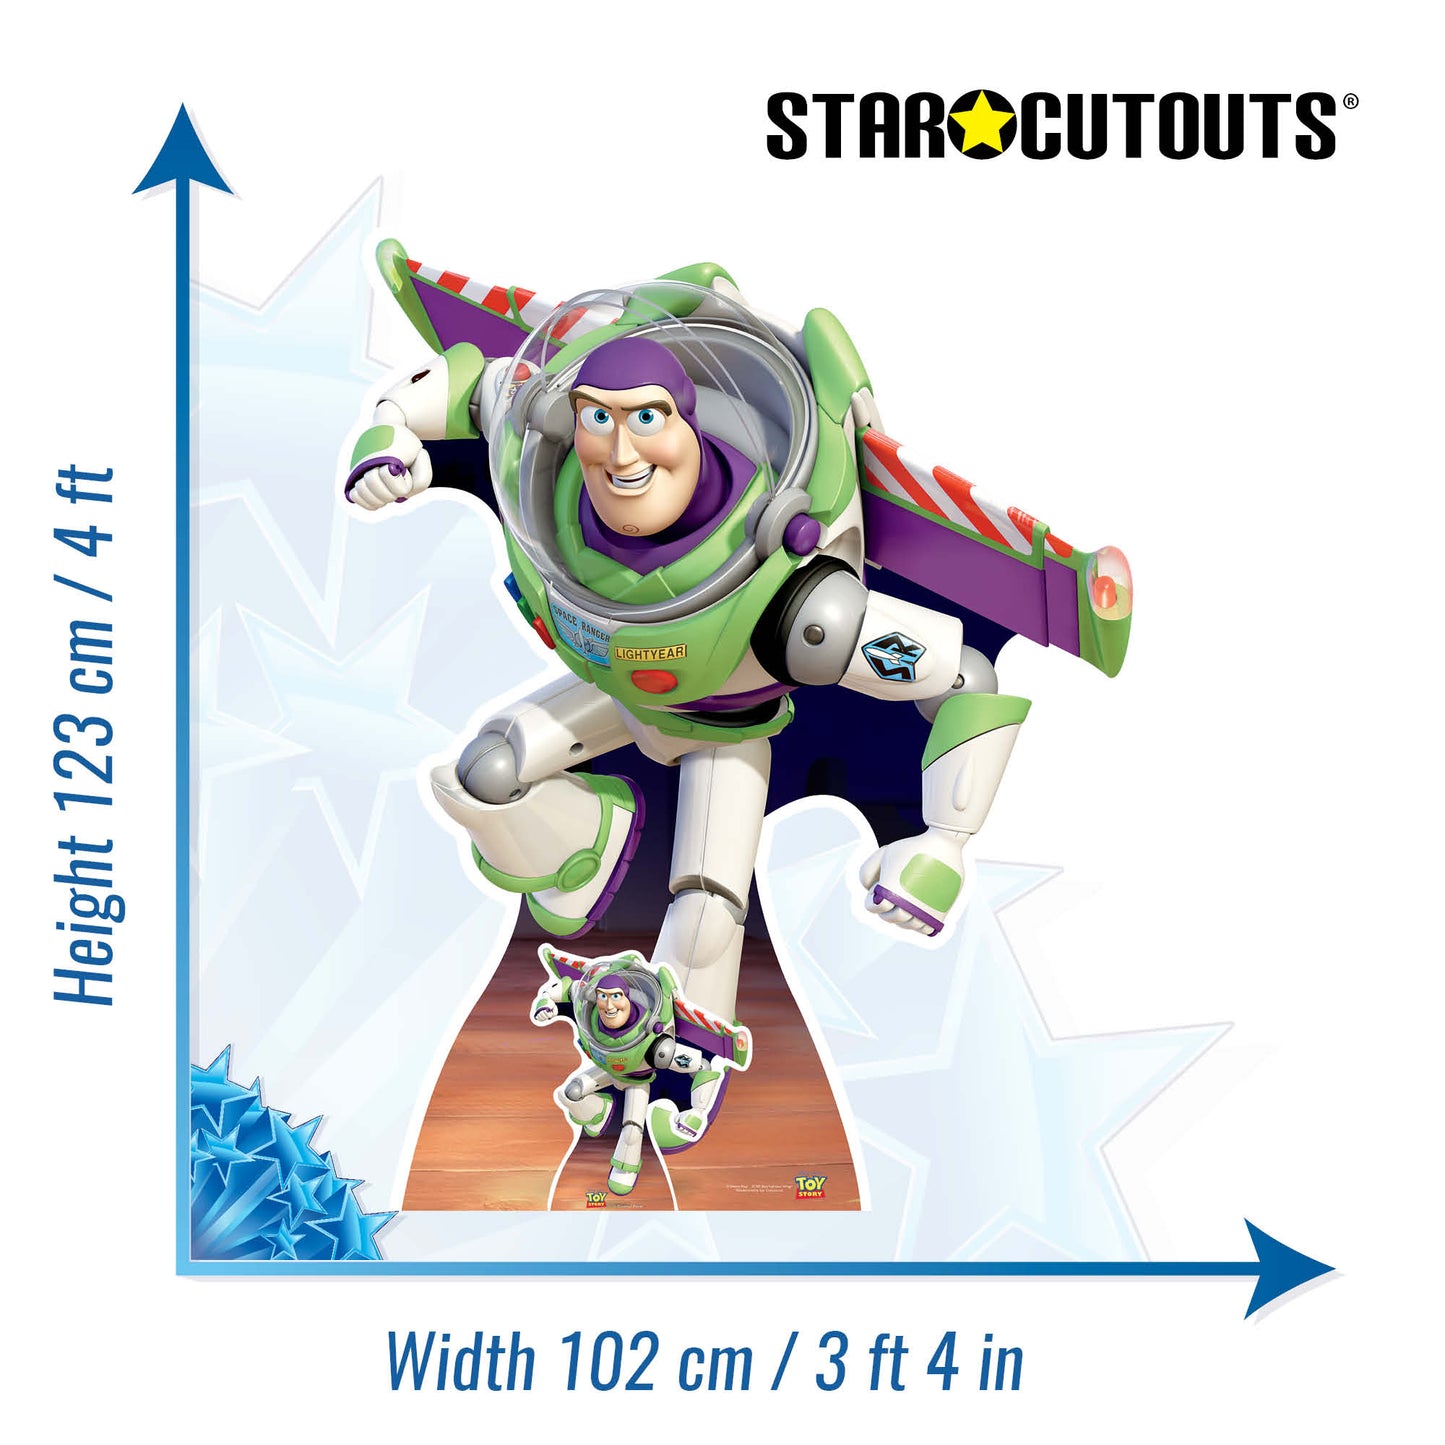 Buzz Lightyear - Infinity & Beyond Toy Story Cardboard Cutout